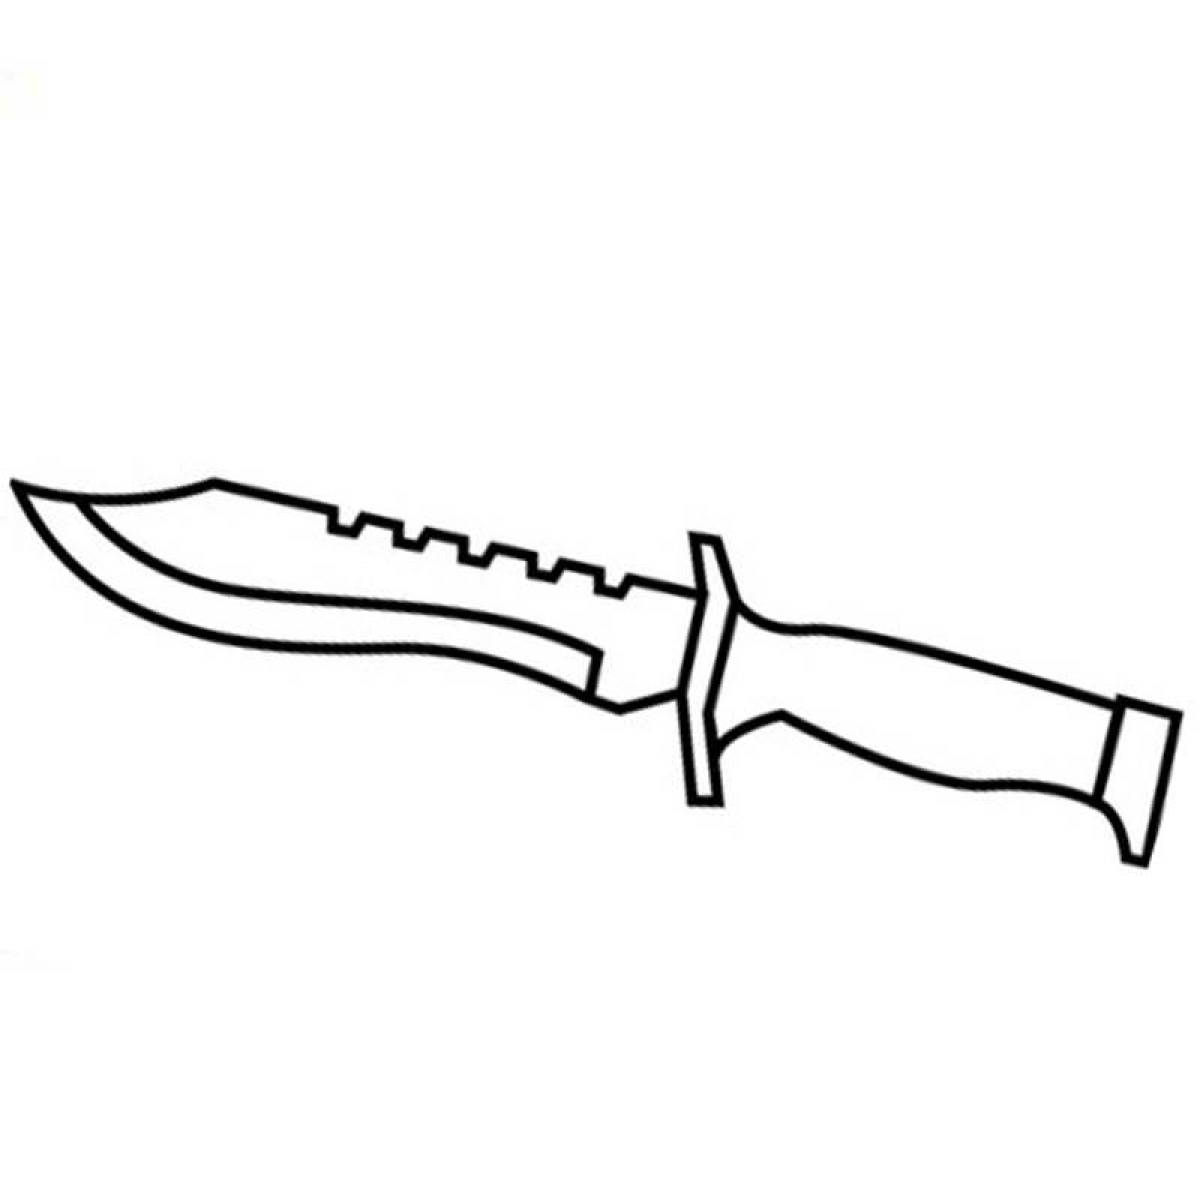 Раскраски стендофф ножи. Ножи из СТЕНДОФФ 2. Раскраска нож. Нож для распечатки. Раскраска ножи из СТЕНДОФФ 2.